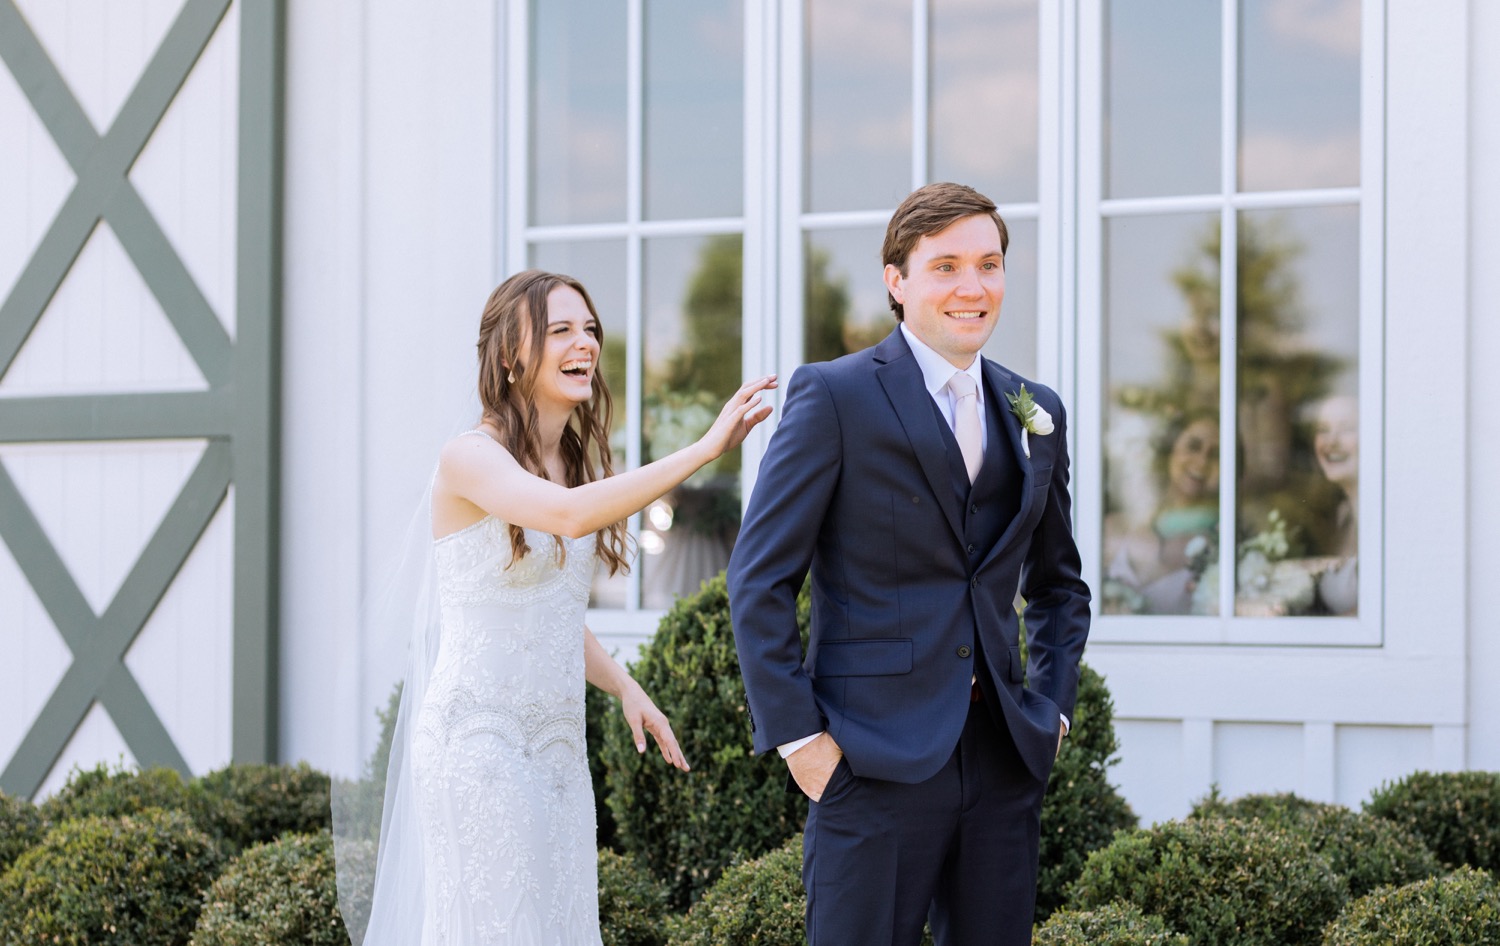 First look between bride and groom before wedding ceremony in Charlottesville, VA